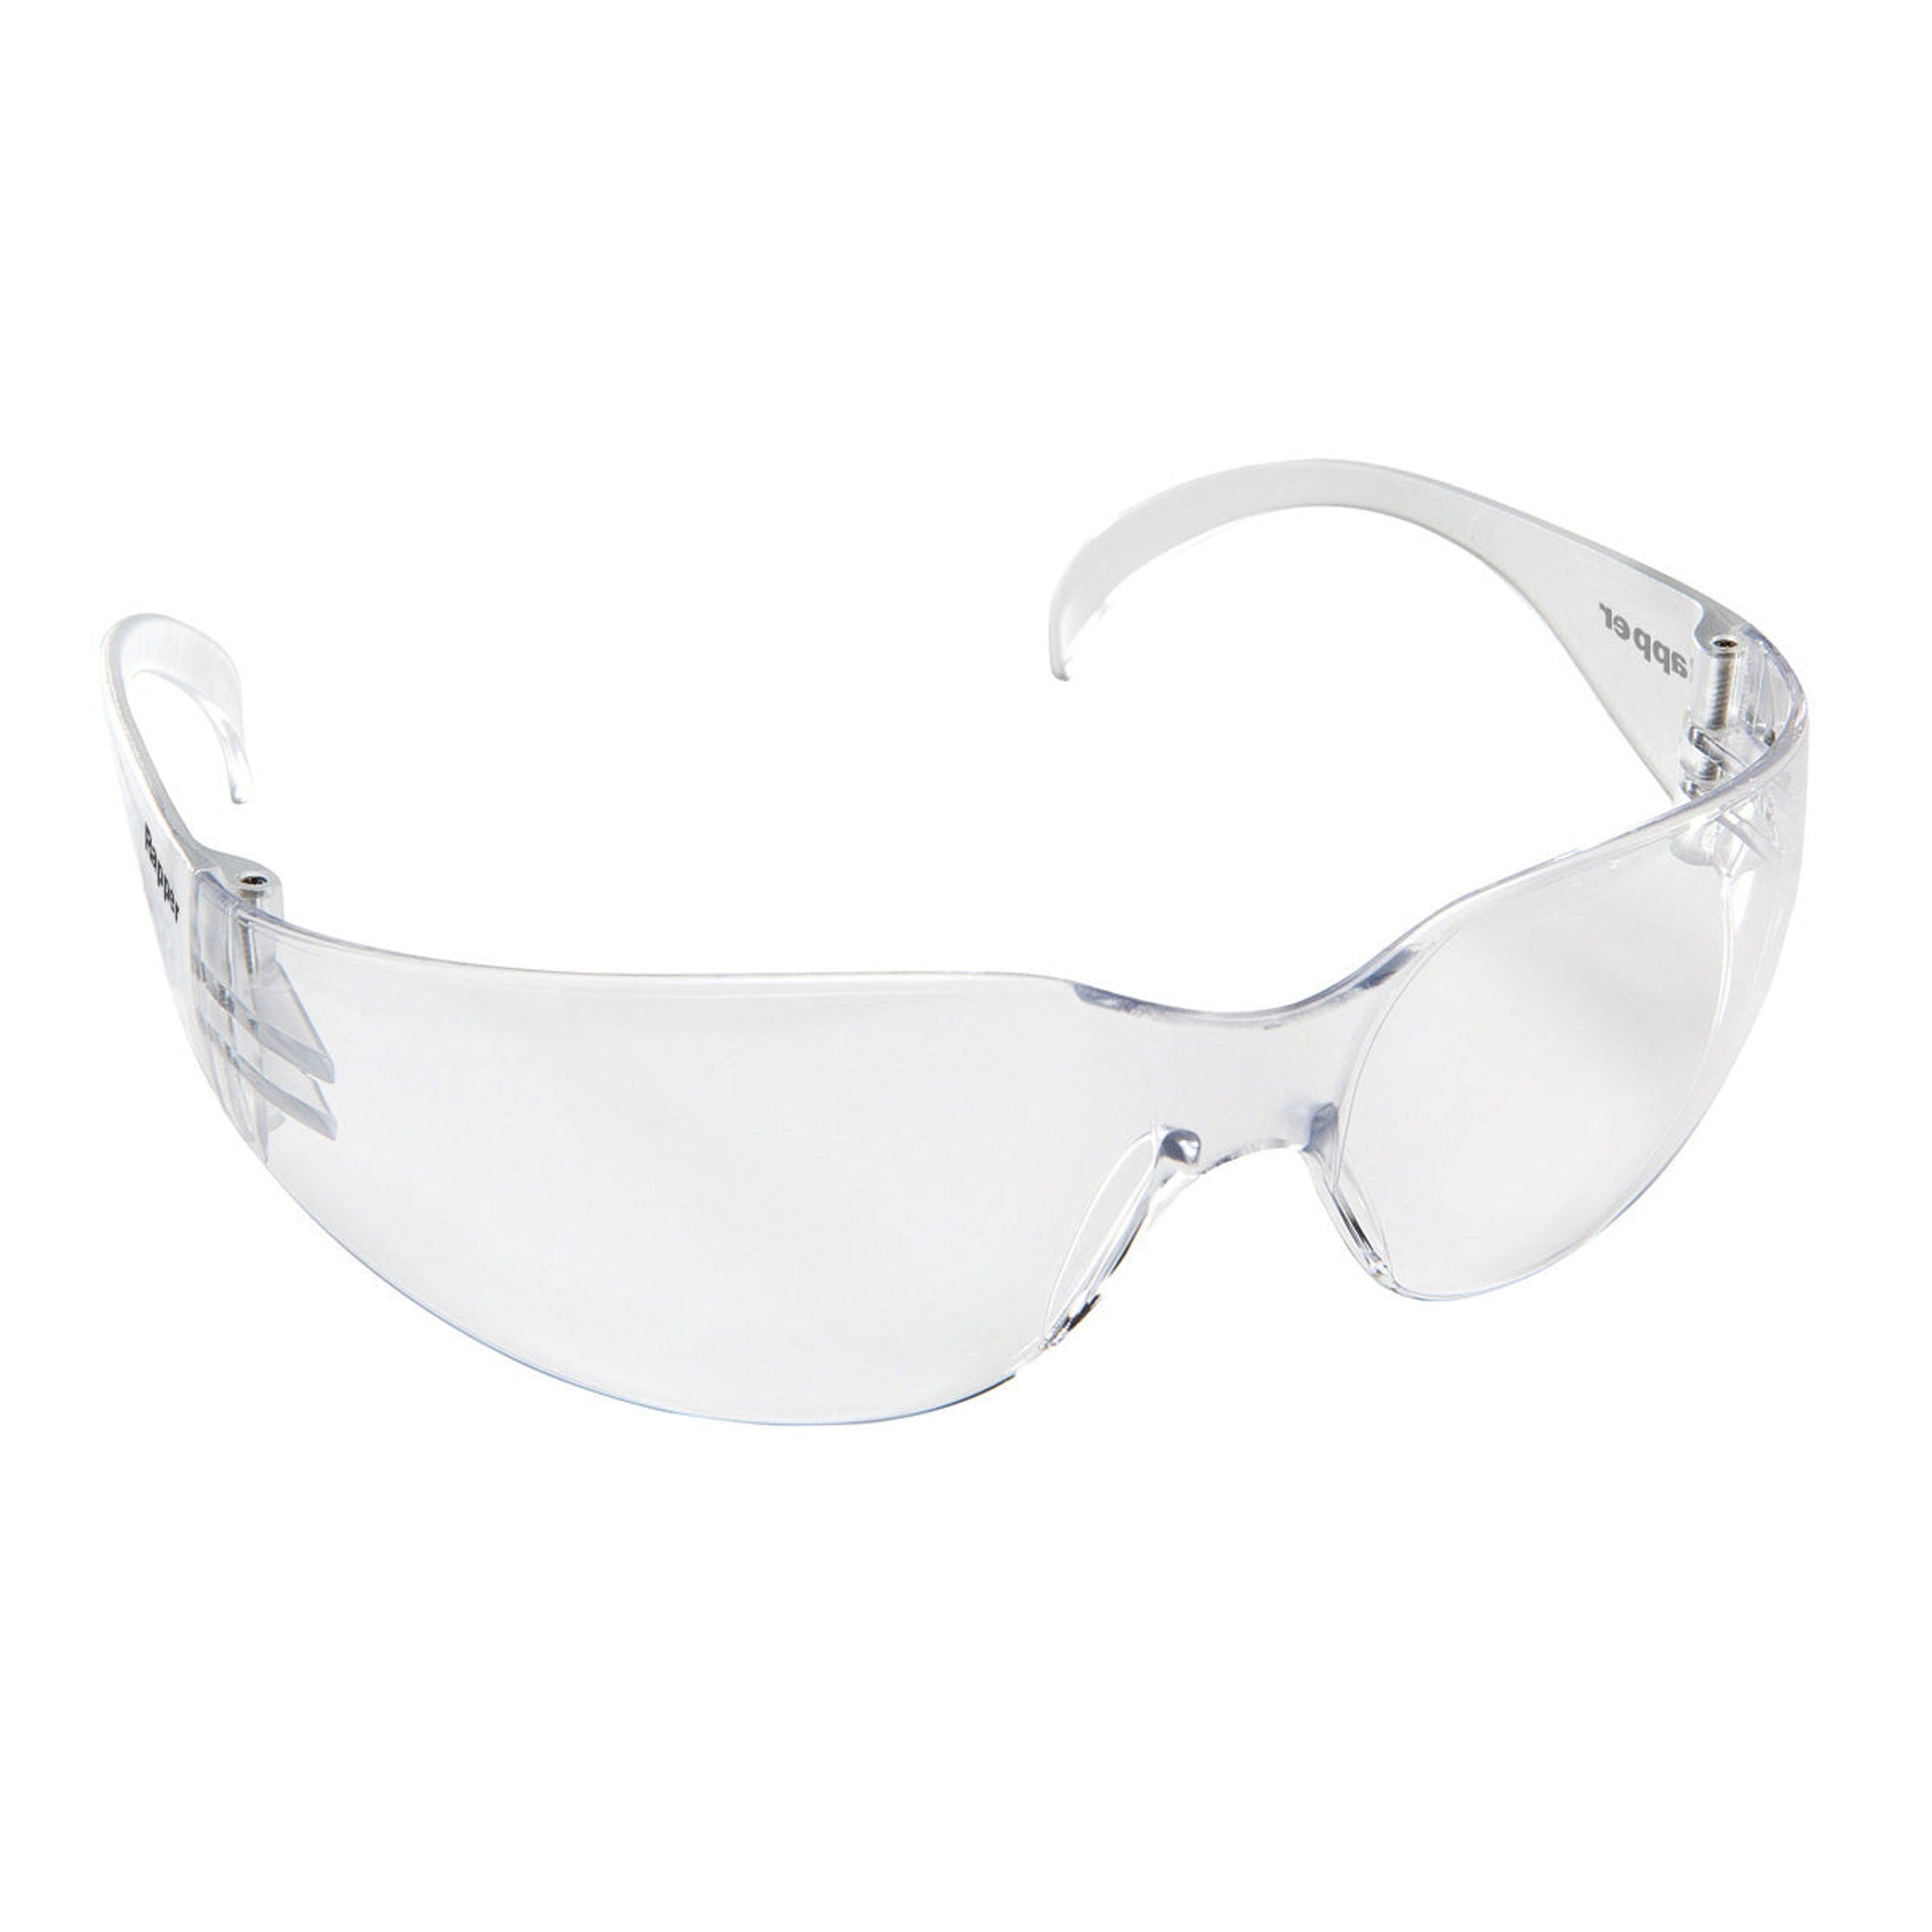 Force 360 Rapper Clear Safety Glasses - EWRX810